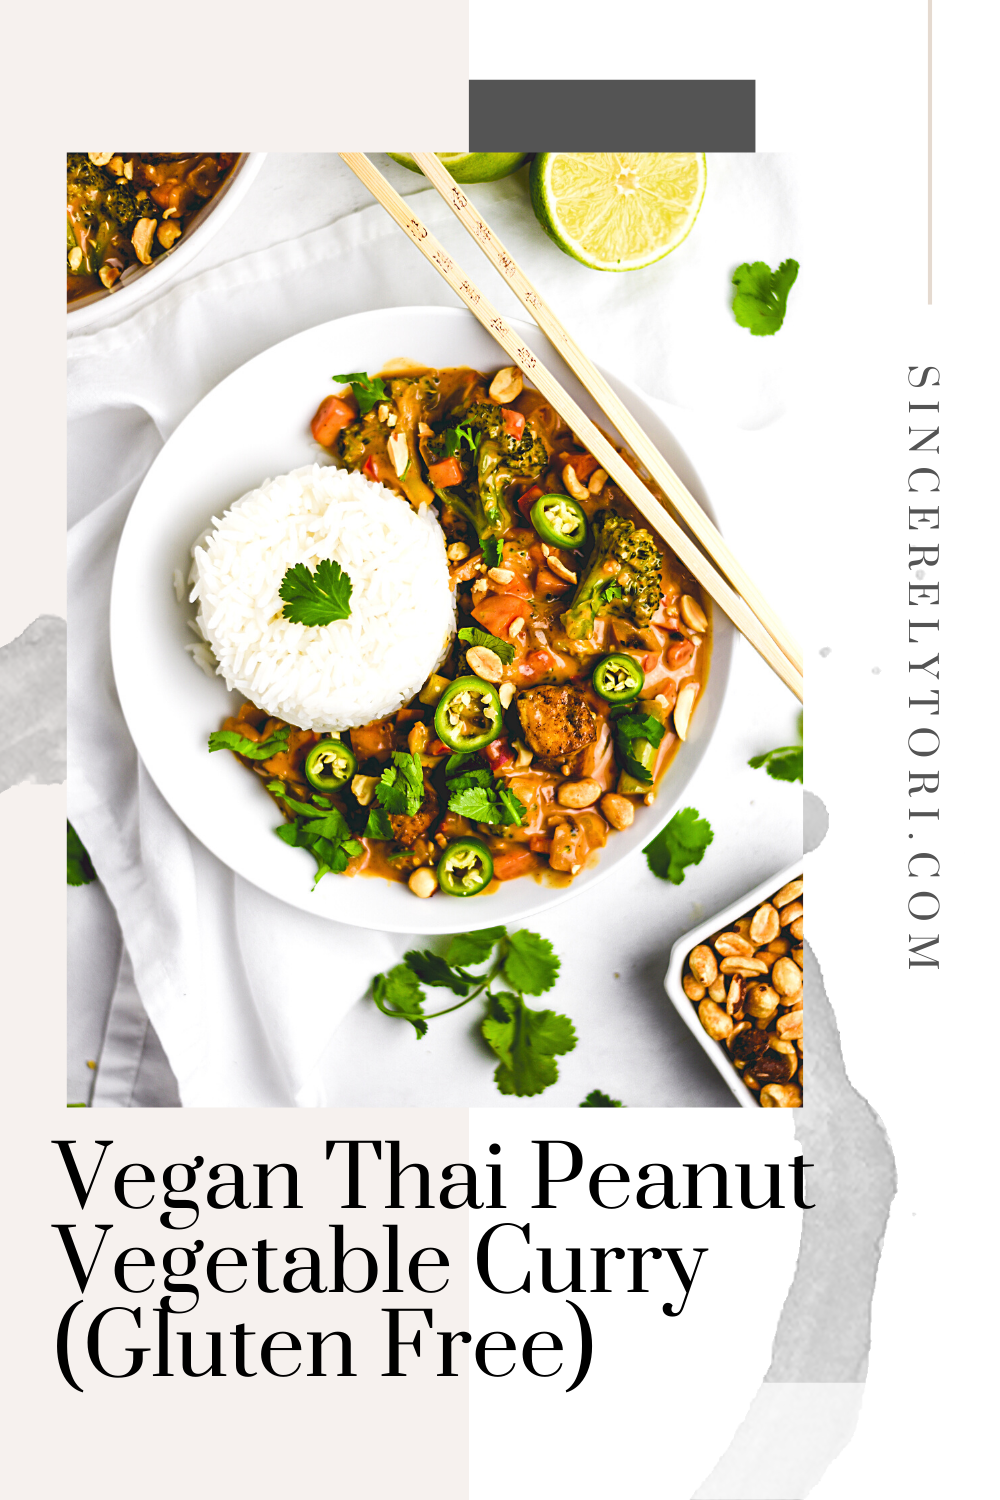 Vegan Thai Tori Free) (Gluten Vegetable – Curry Peanut Sincerely